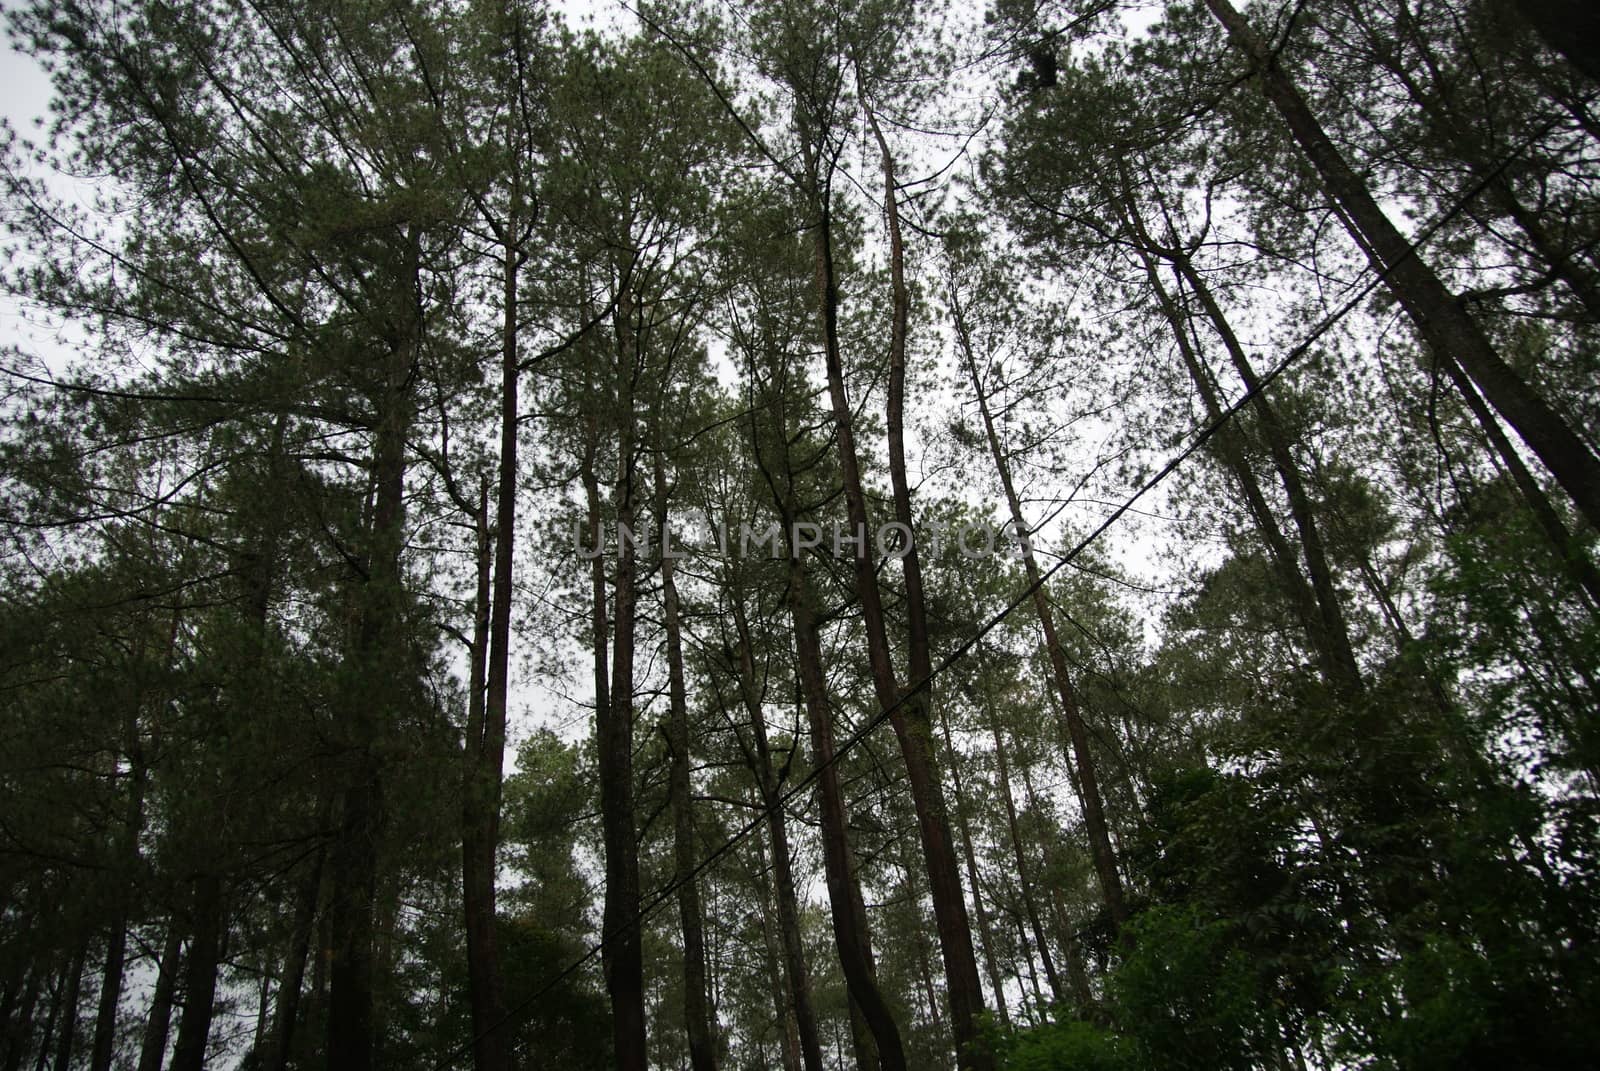 Tall tree of Bandung Rainforest along the road to Tangkuban Perahu